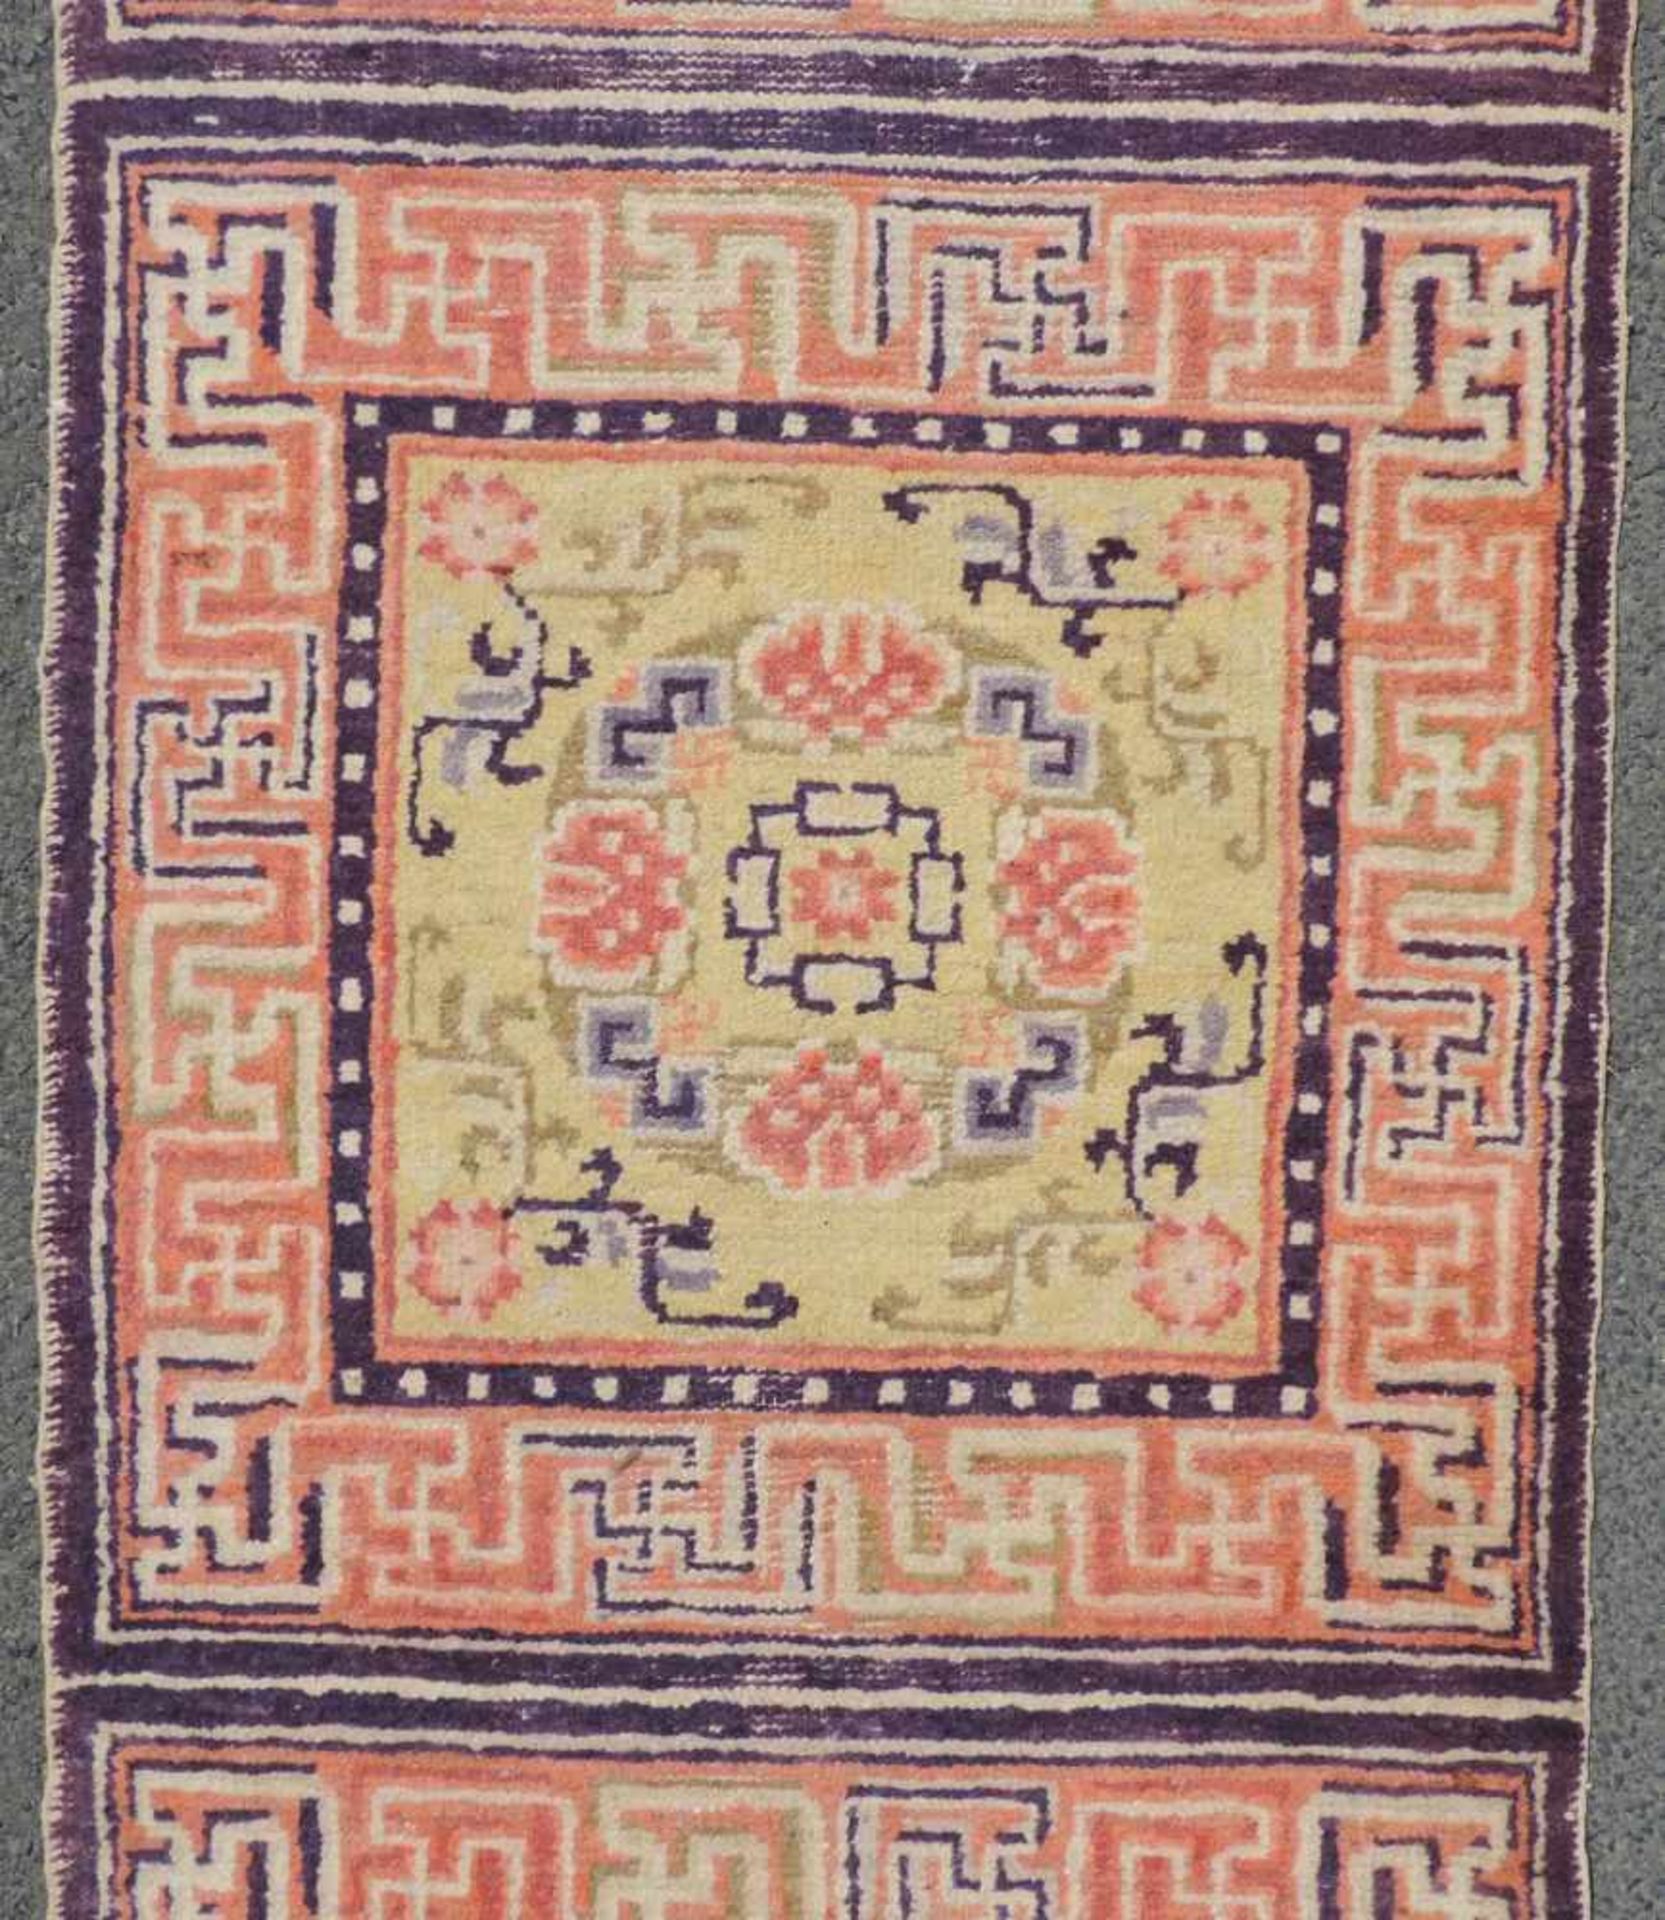 Ning Hsia Sitzbankteppich. China. Antik, um 1860.181 cm x 59 cm. Handgeknüpft. Wolle auf - Image 3 of 6